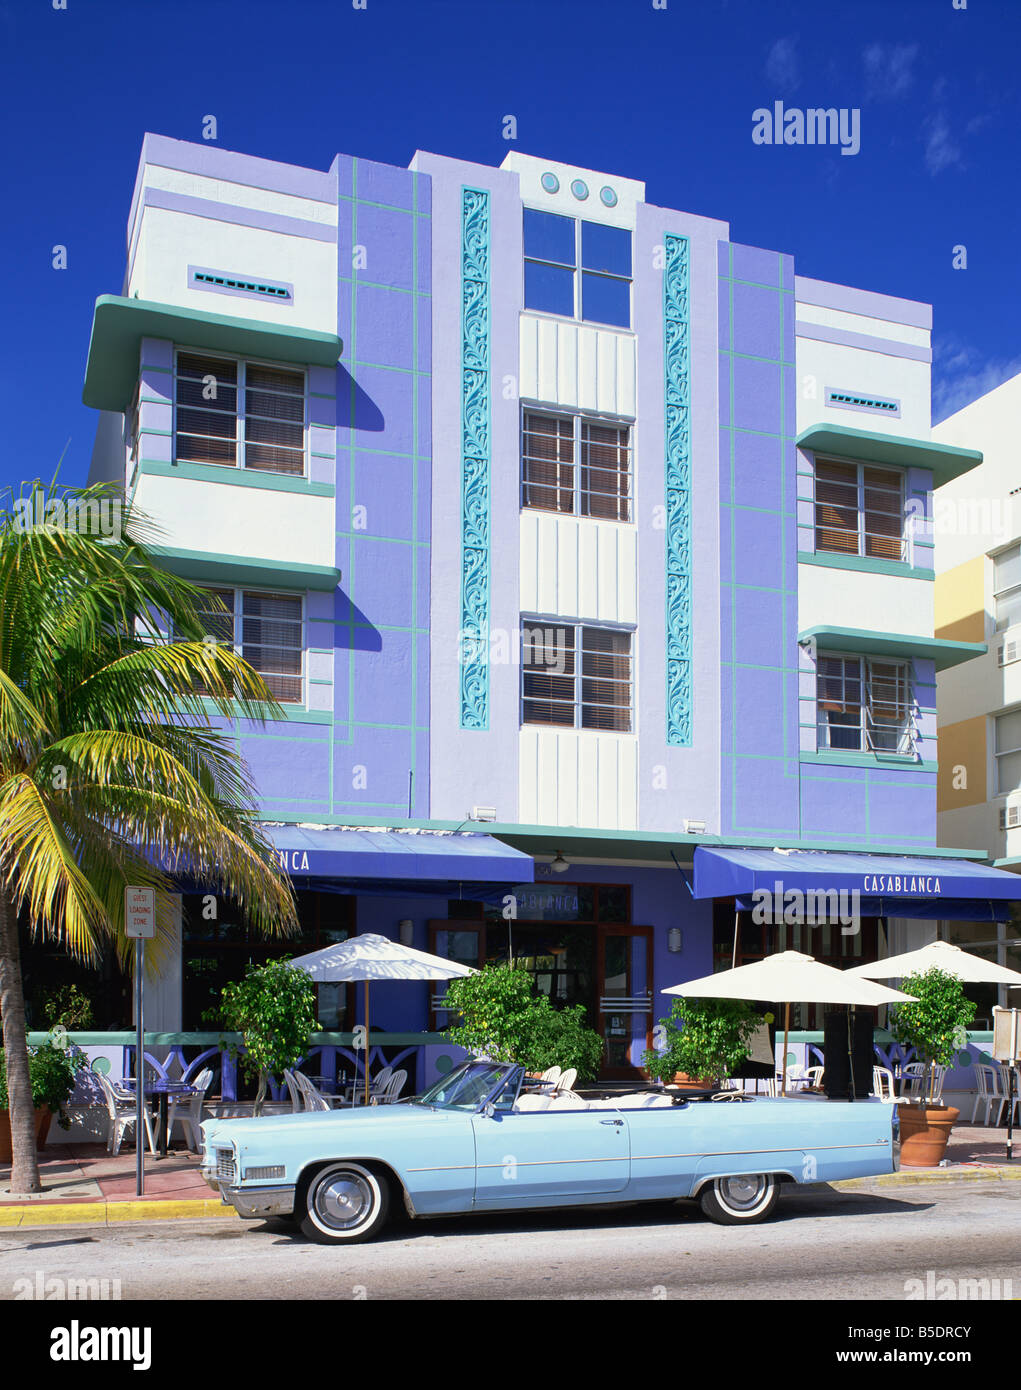 Classic American car en dehors de l'hôtel Casablanca Ocean Drive Art Deco District Miami Beach South Beach Miami Florida USA N Banque D'Images